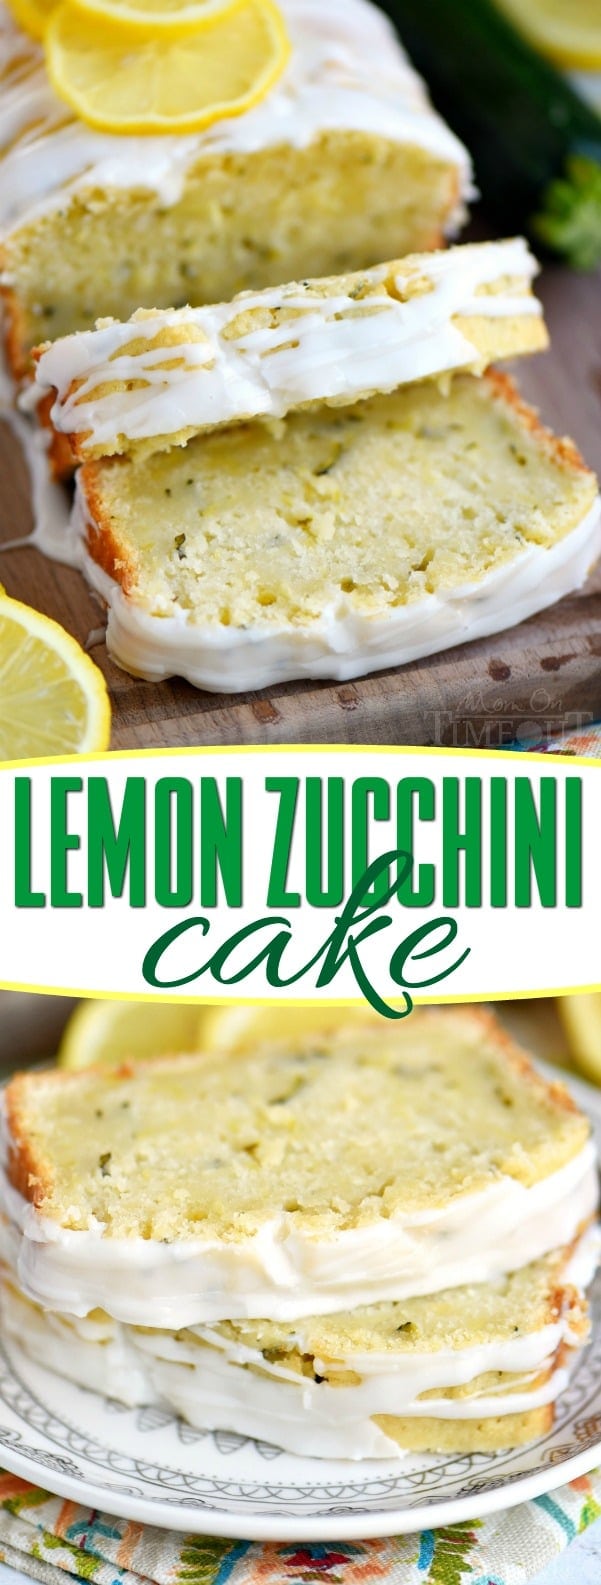 lemon-zucchini-cake-recipe-collage